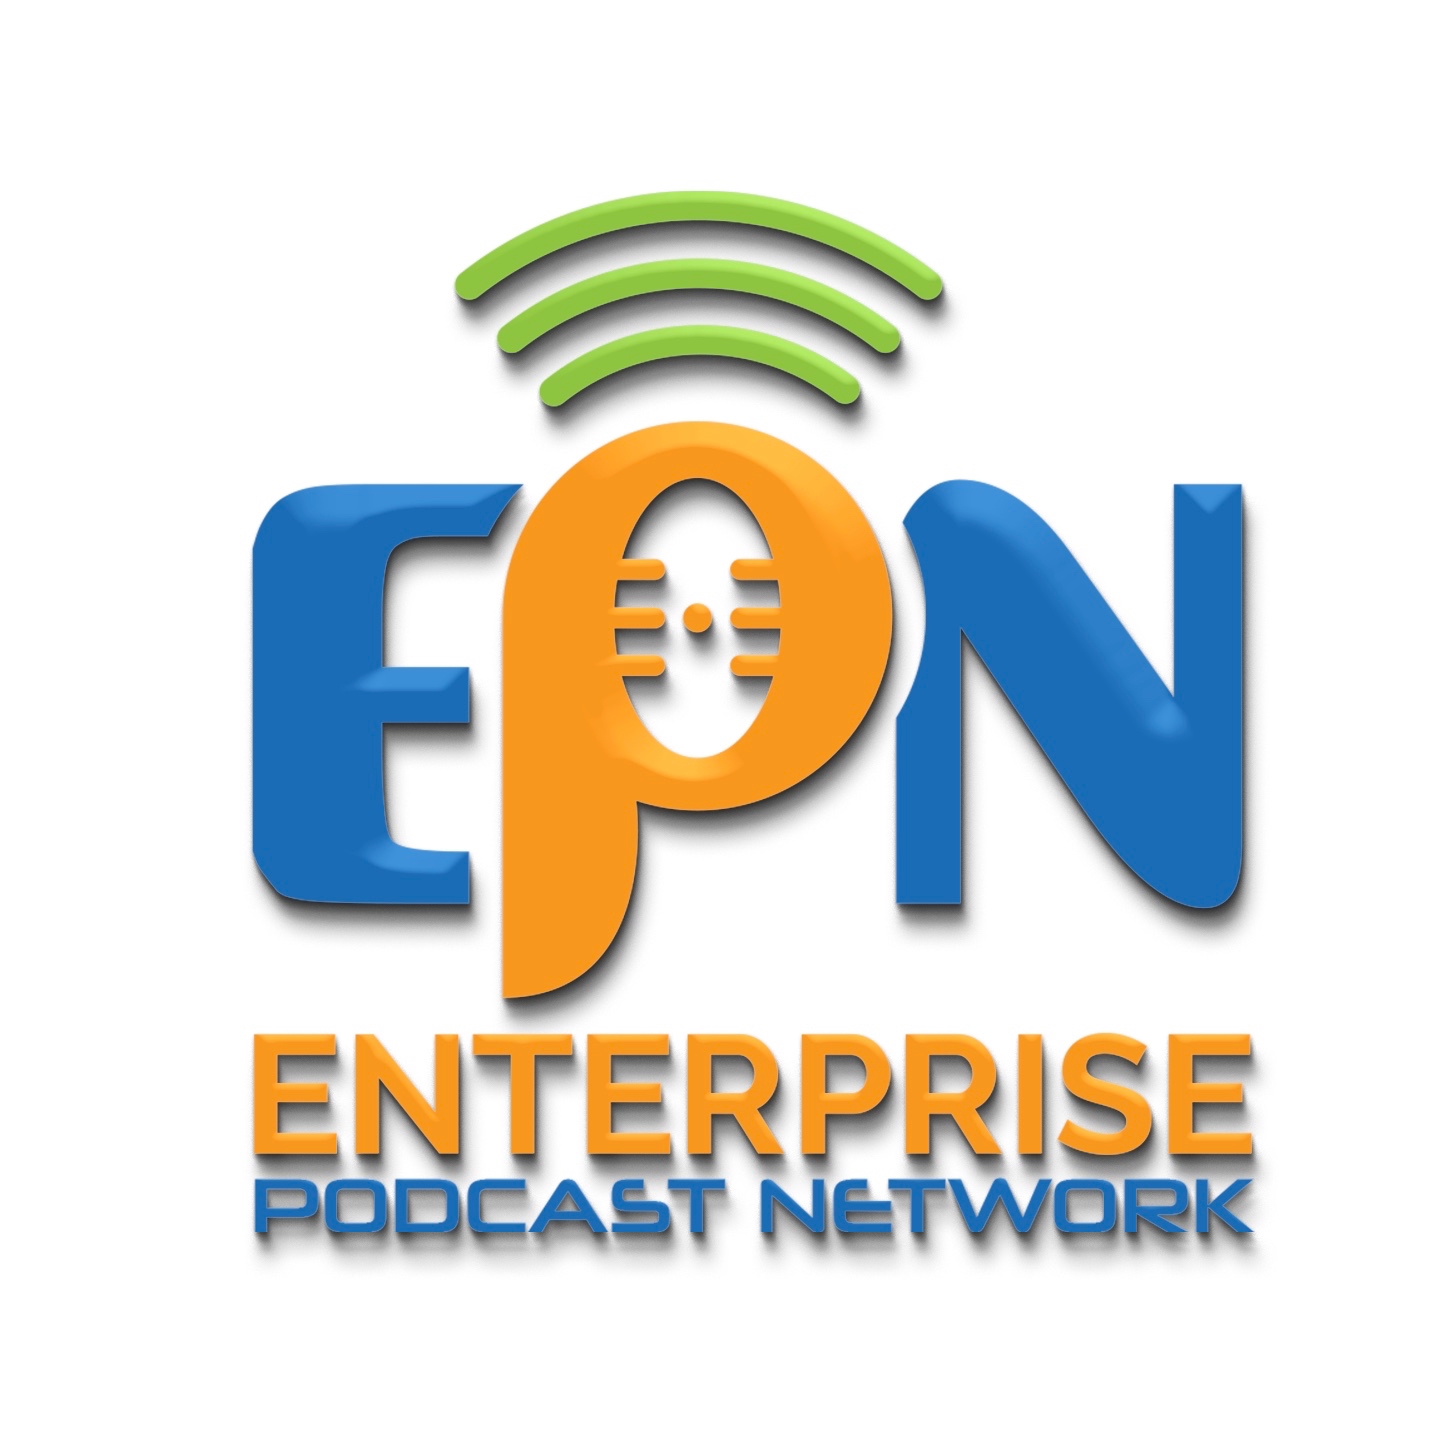 Enterprise Podcast Network – EPN